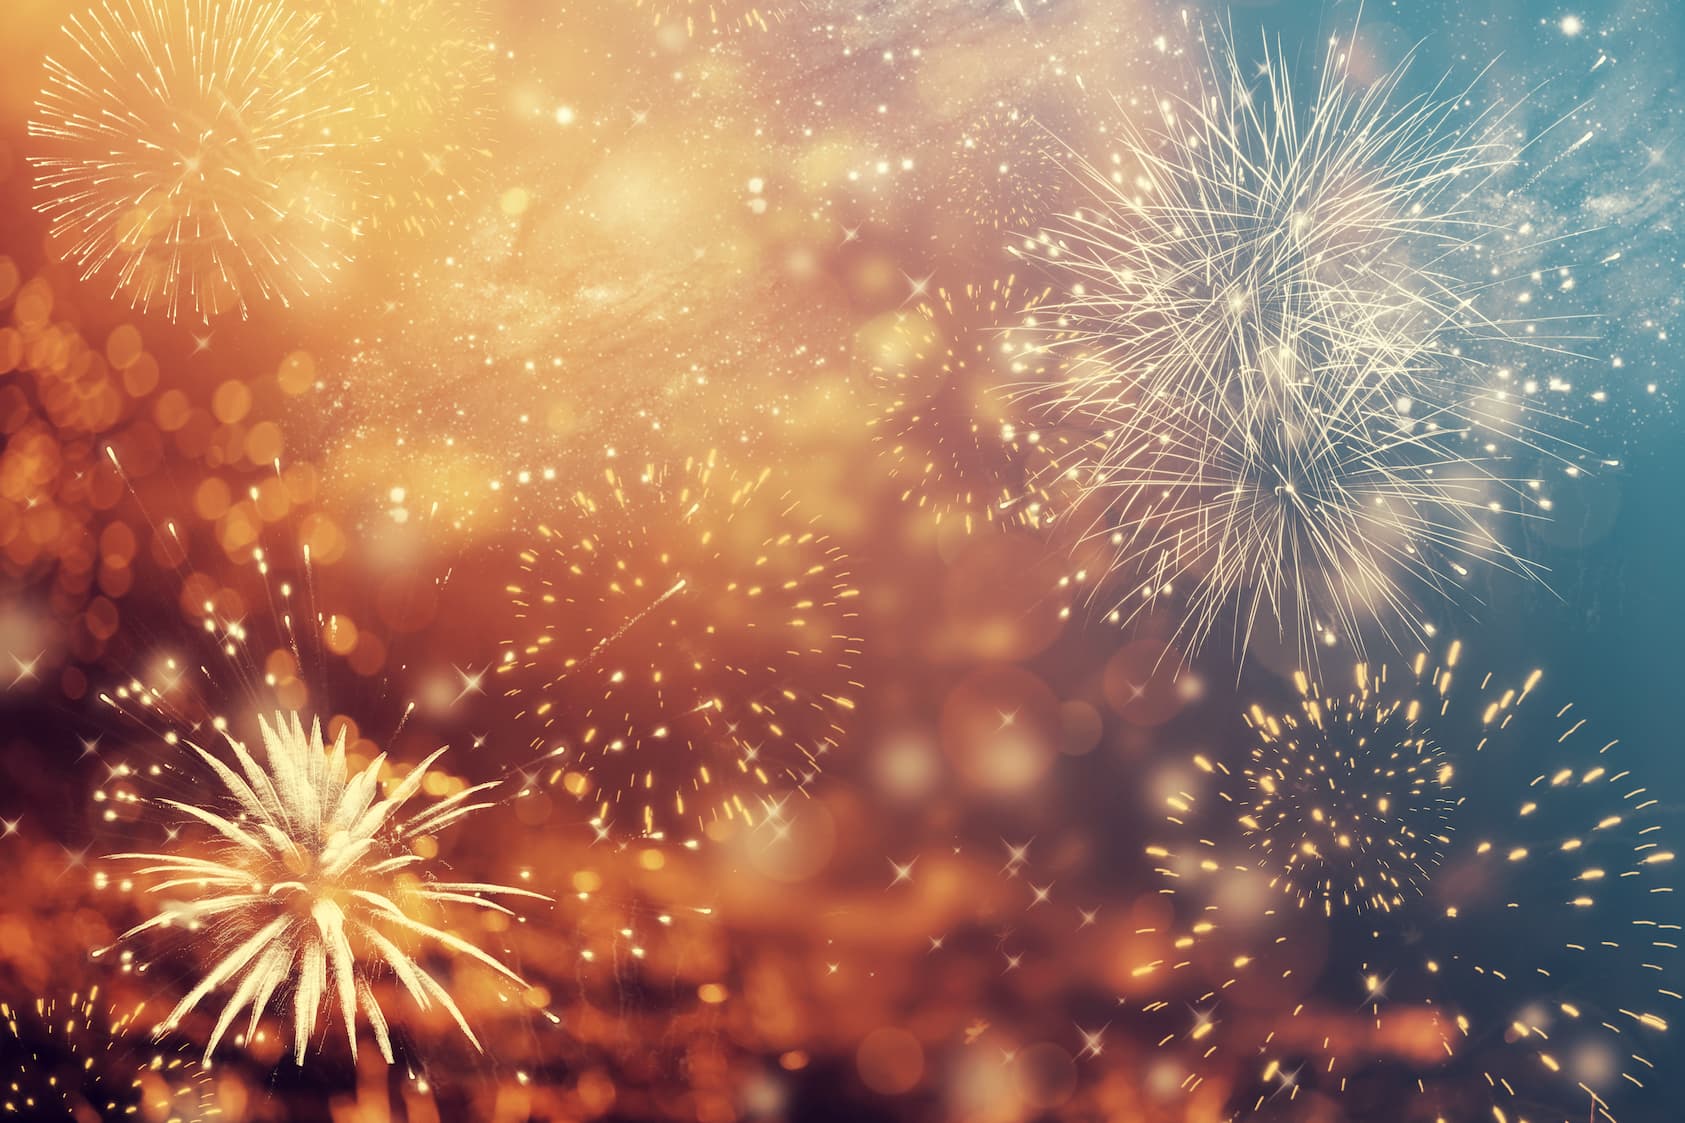 Fireworks on a blurred background